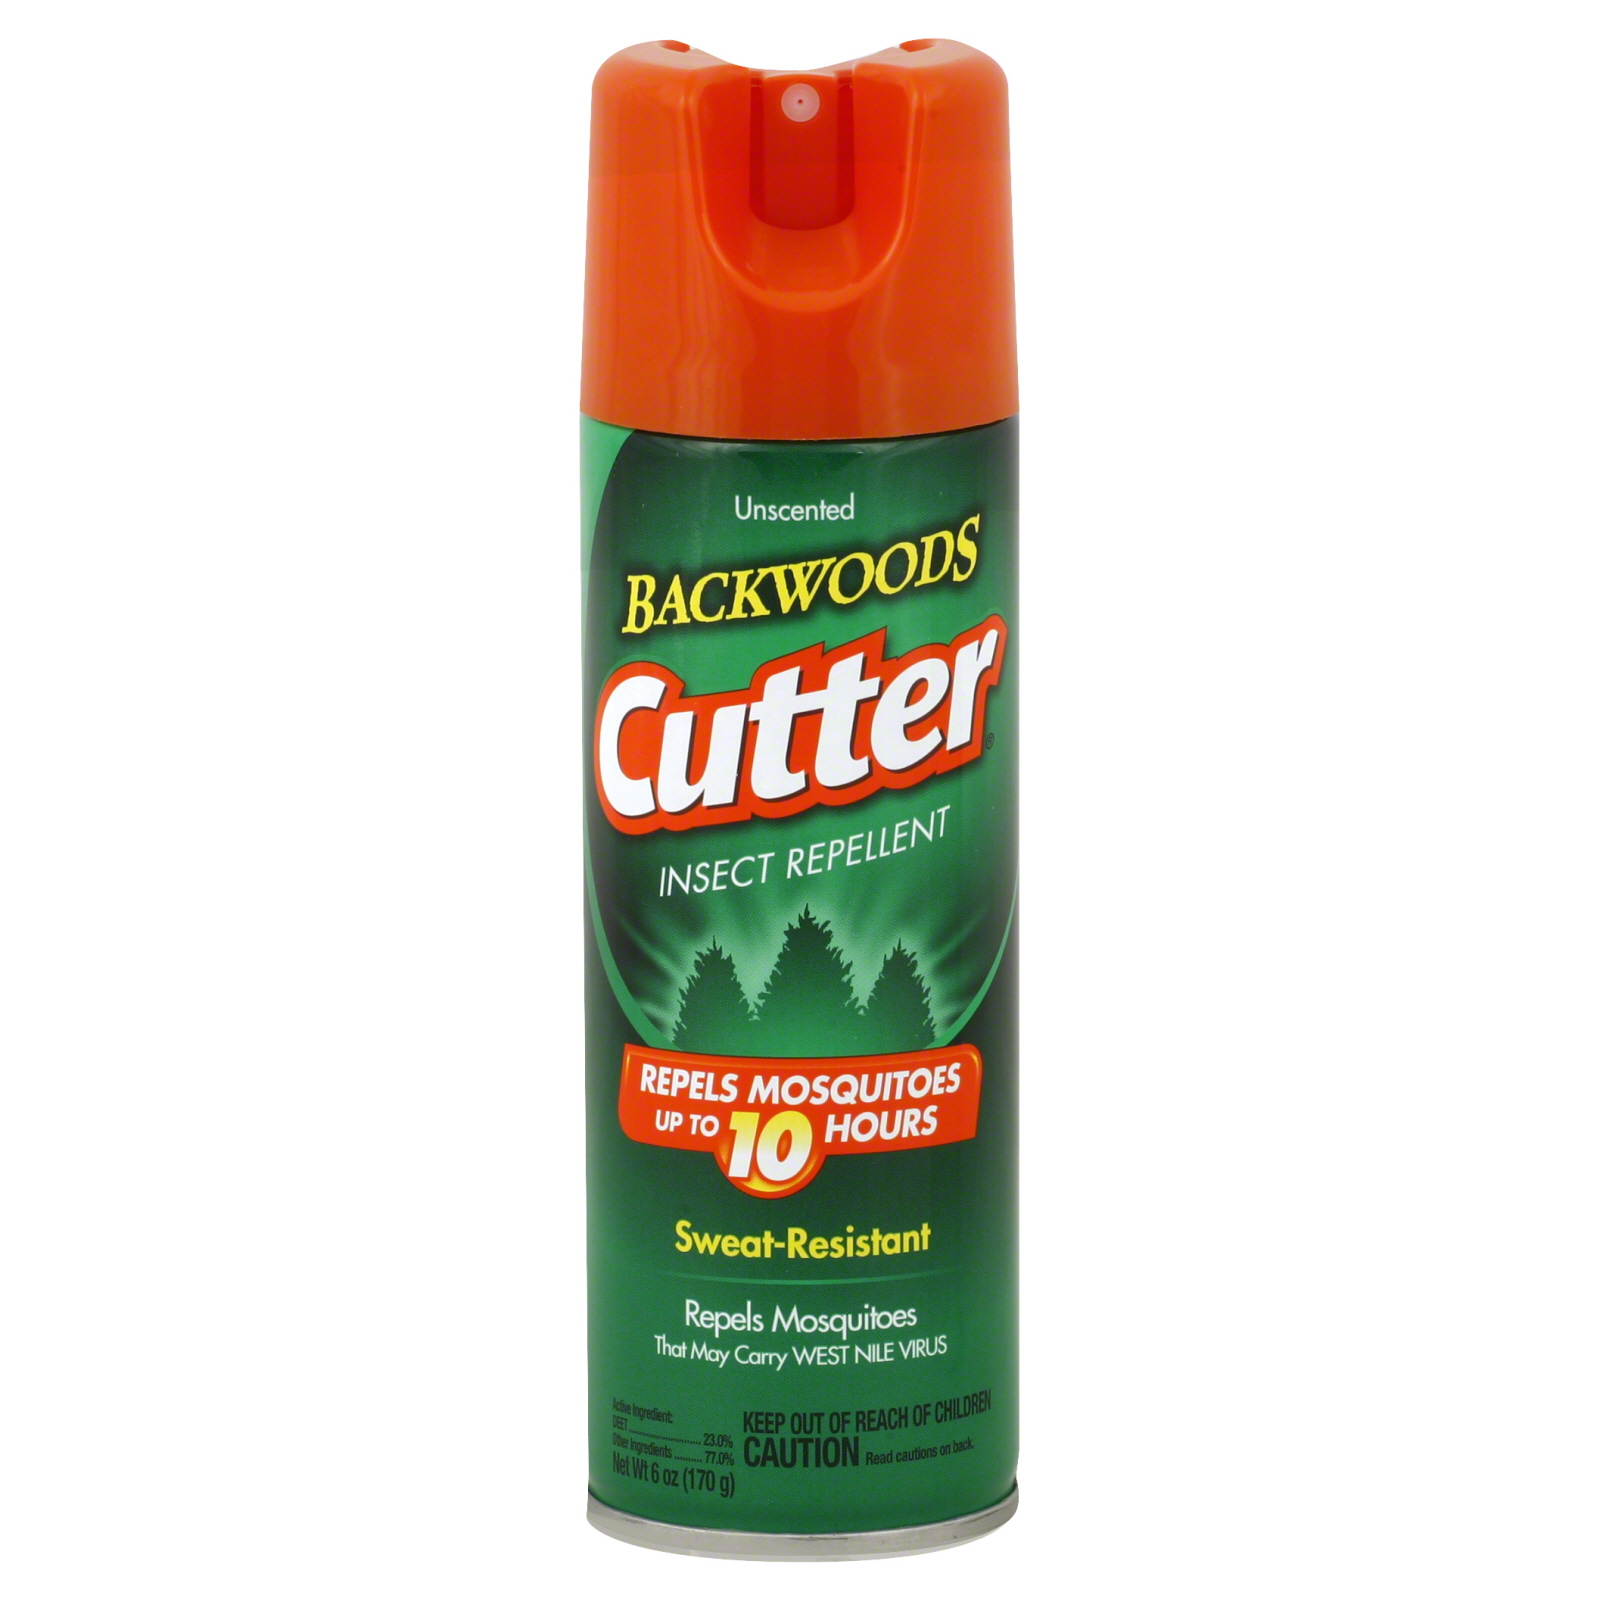 Repellent перевод. Cutter Backwoods спрей. Insect Repellent. Gutter Backwoods спрей. Cutter Backwoods спрей от комаров.